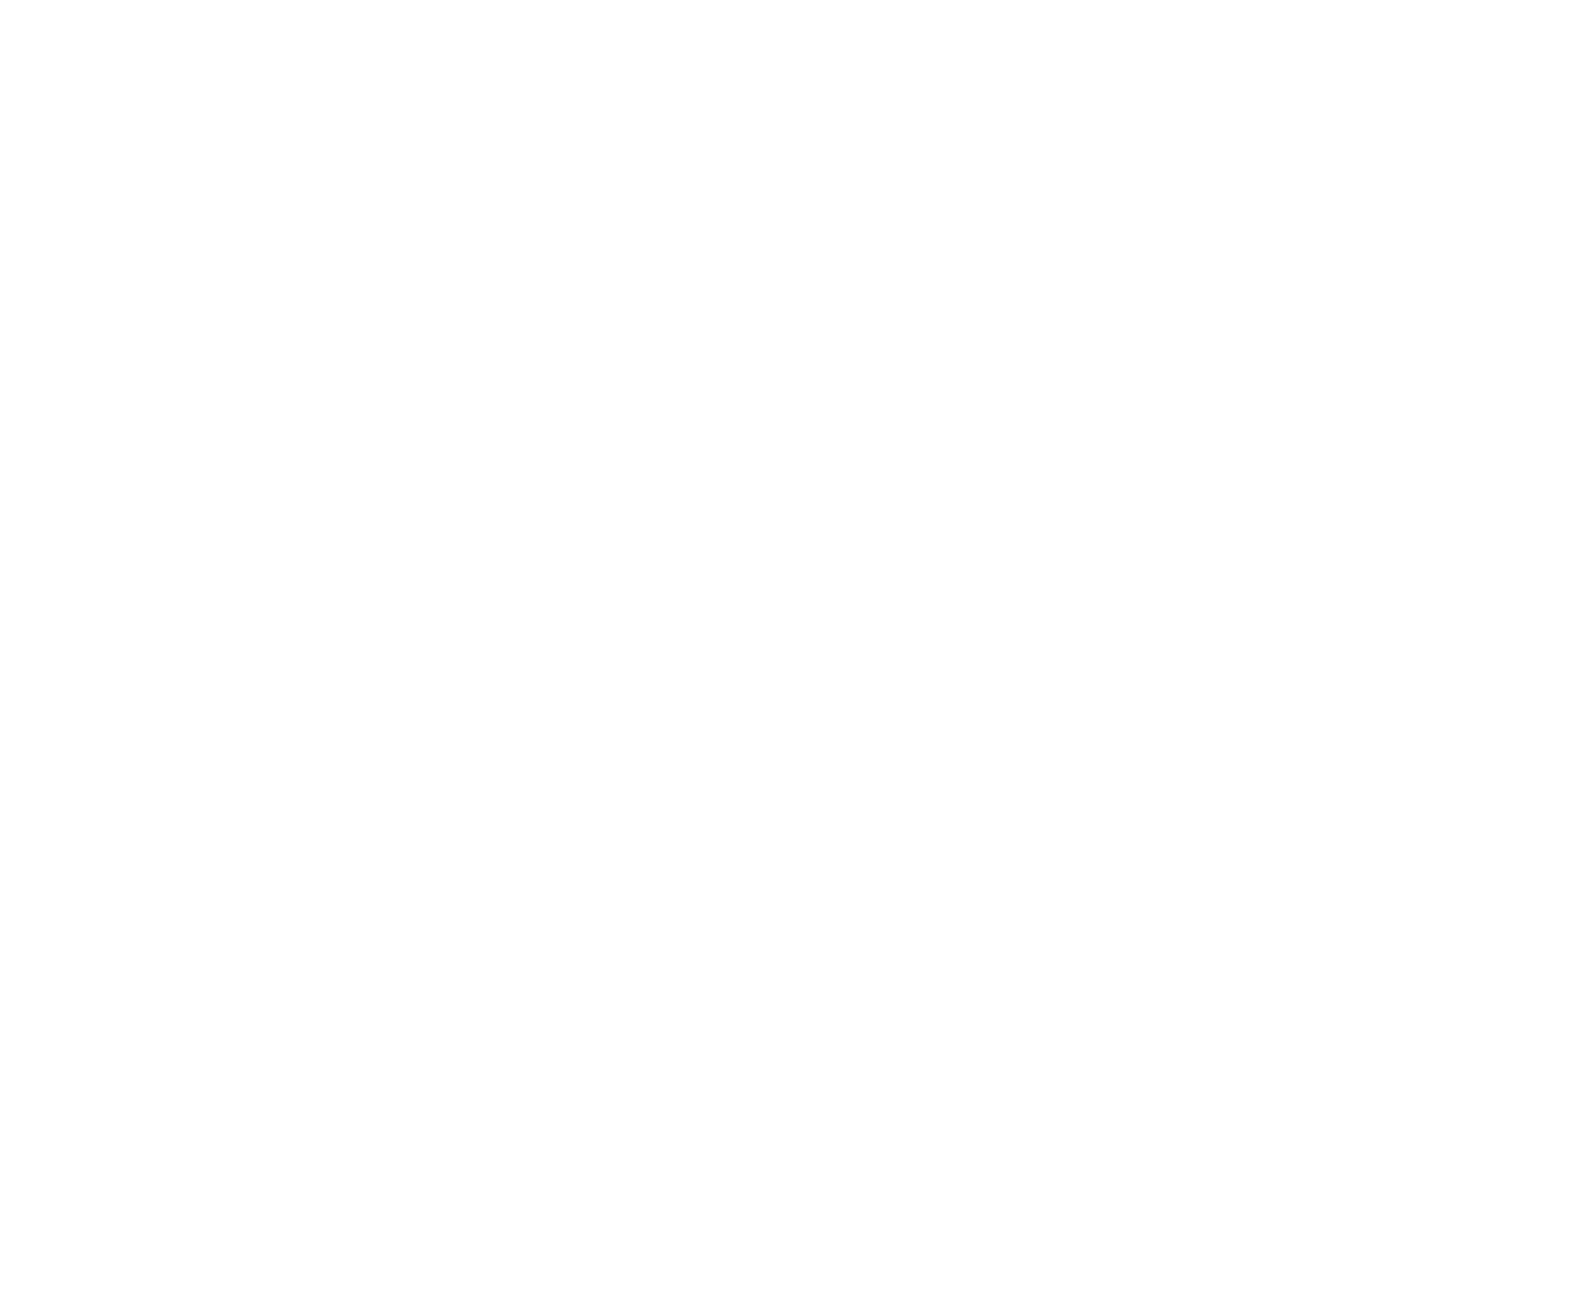 MAG Interactive logo large for dark backgrounds (transparent PNG)